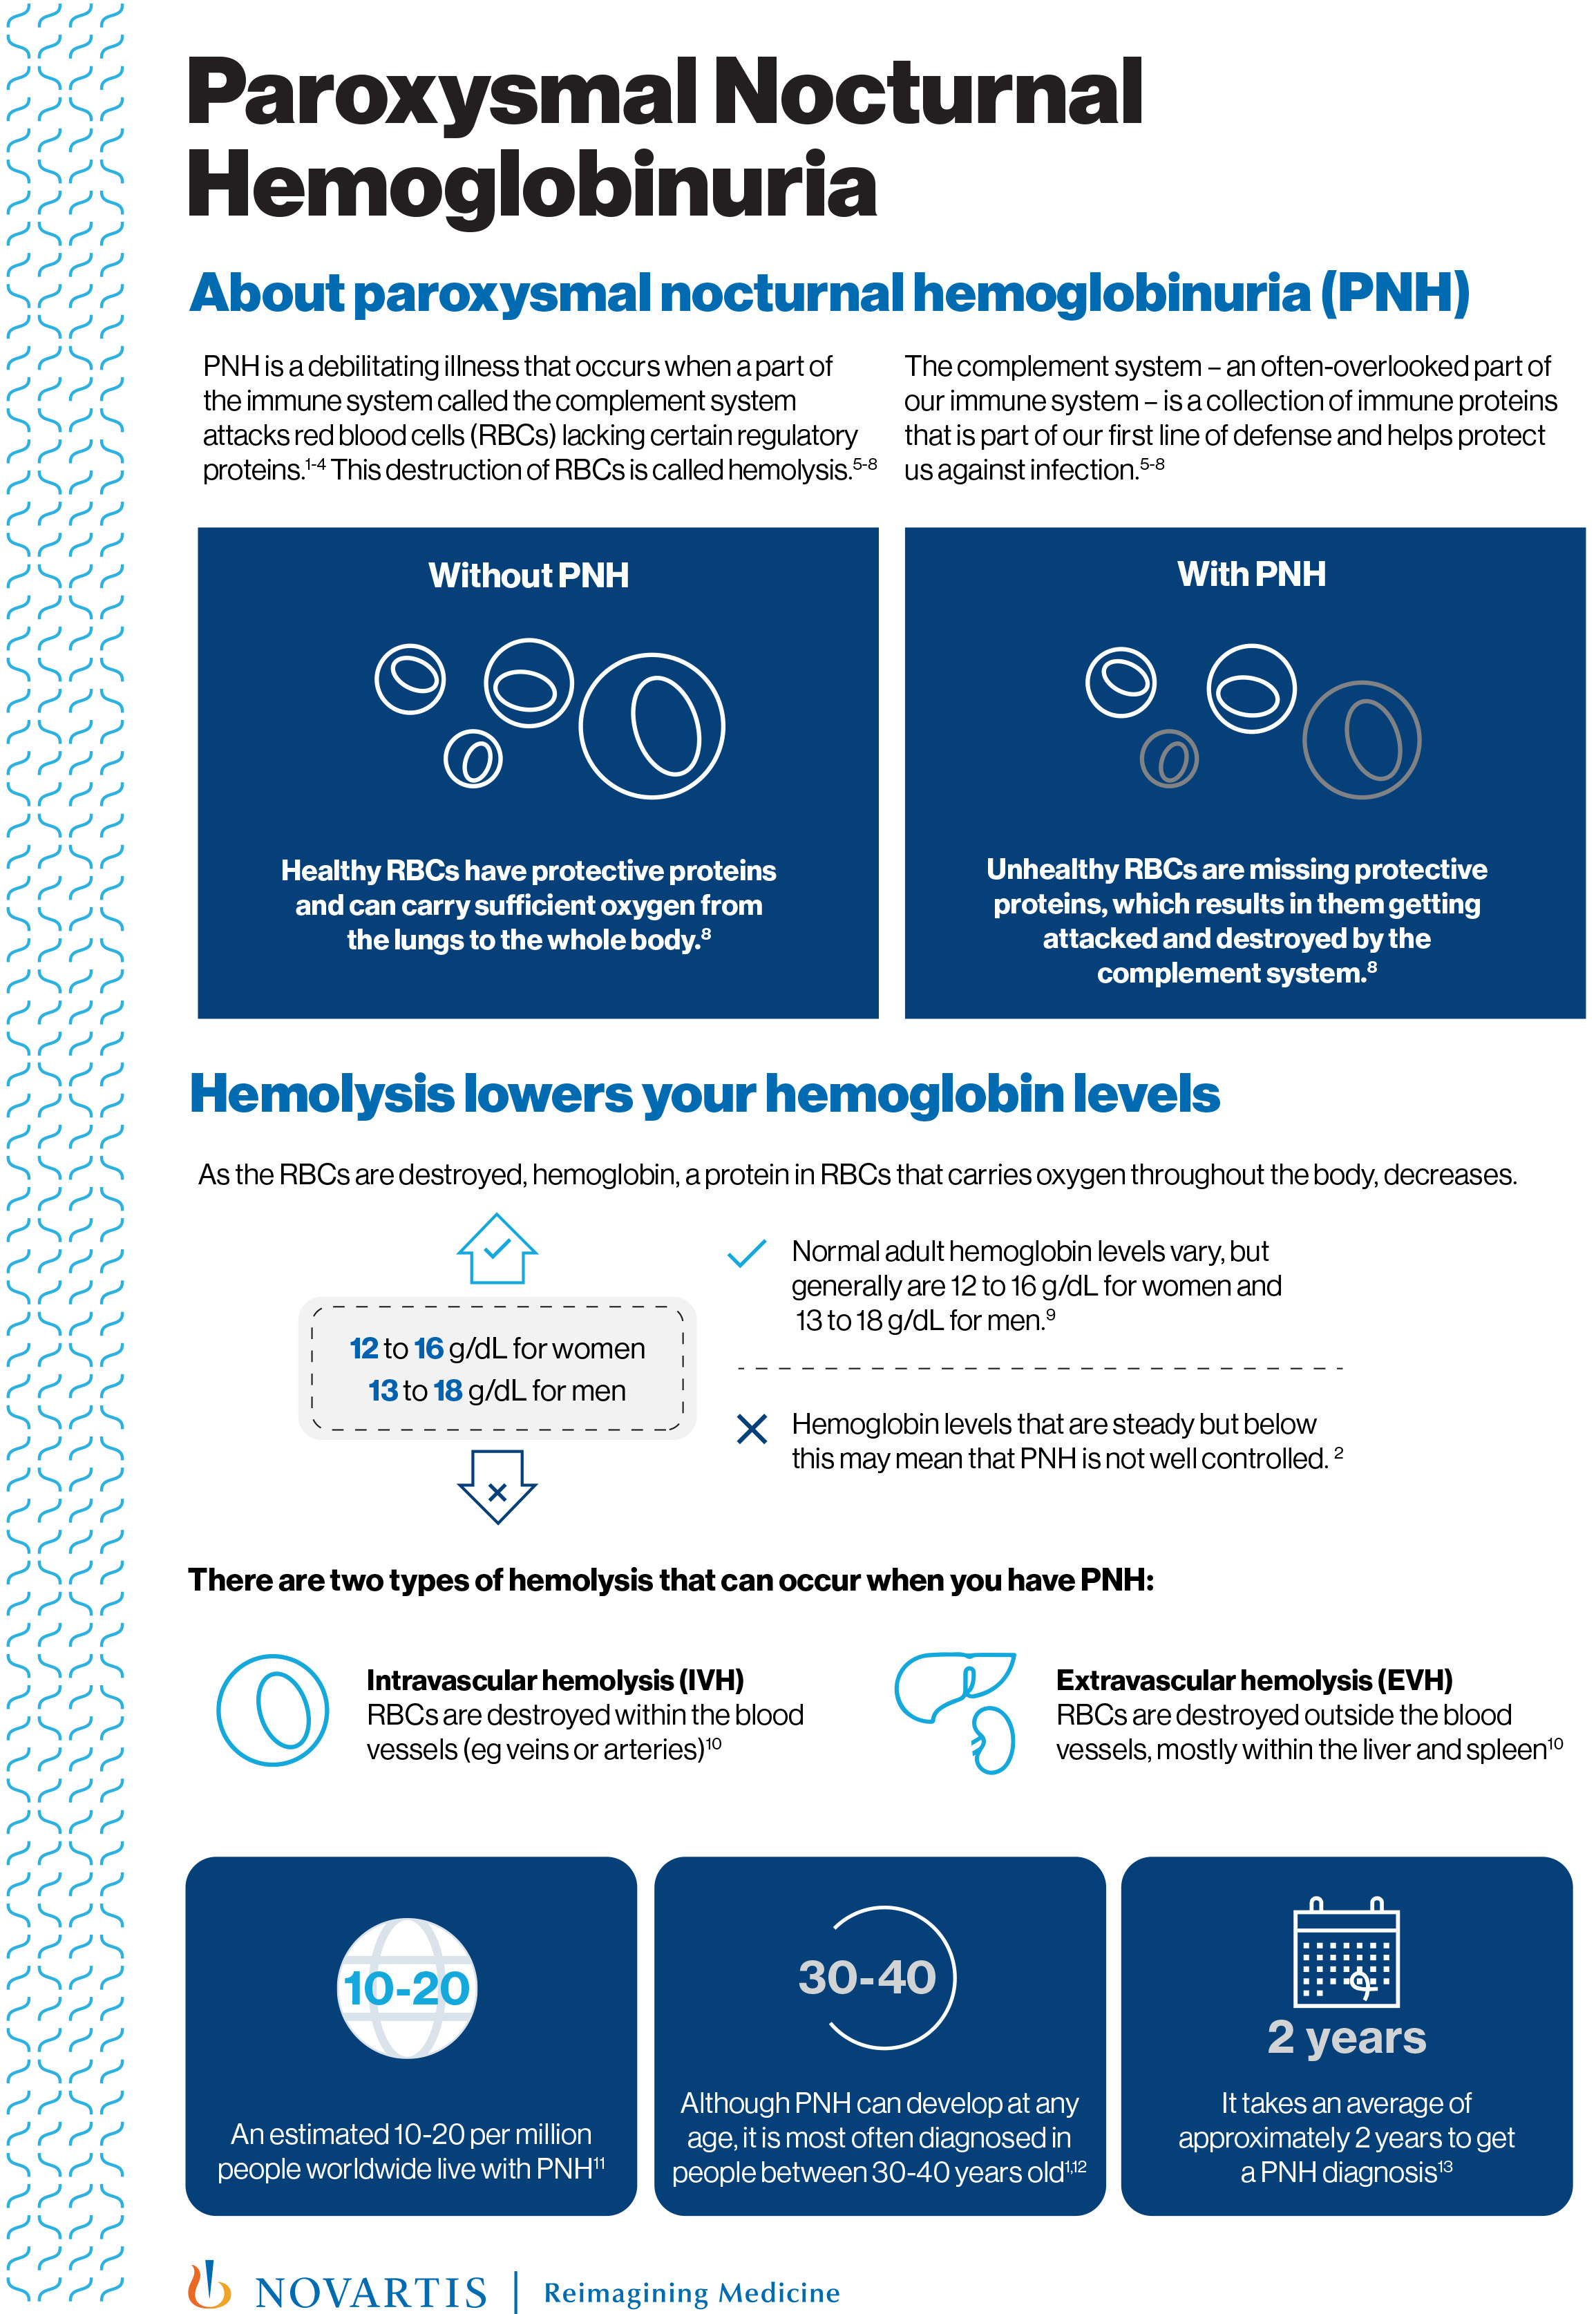 Paroxysmal nocturnal hemoglobinuria (PNH) fact sheet